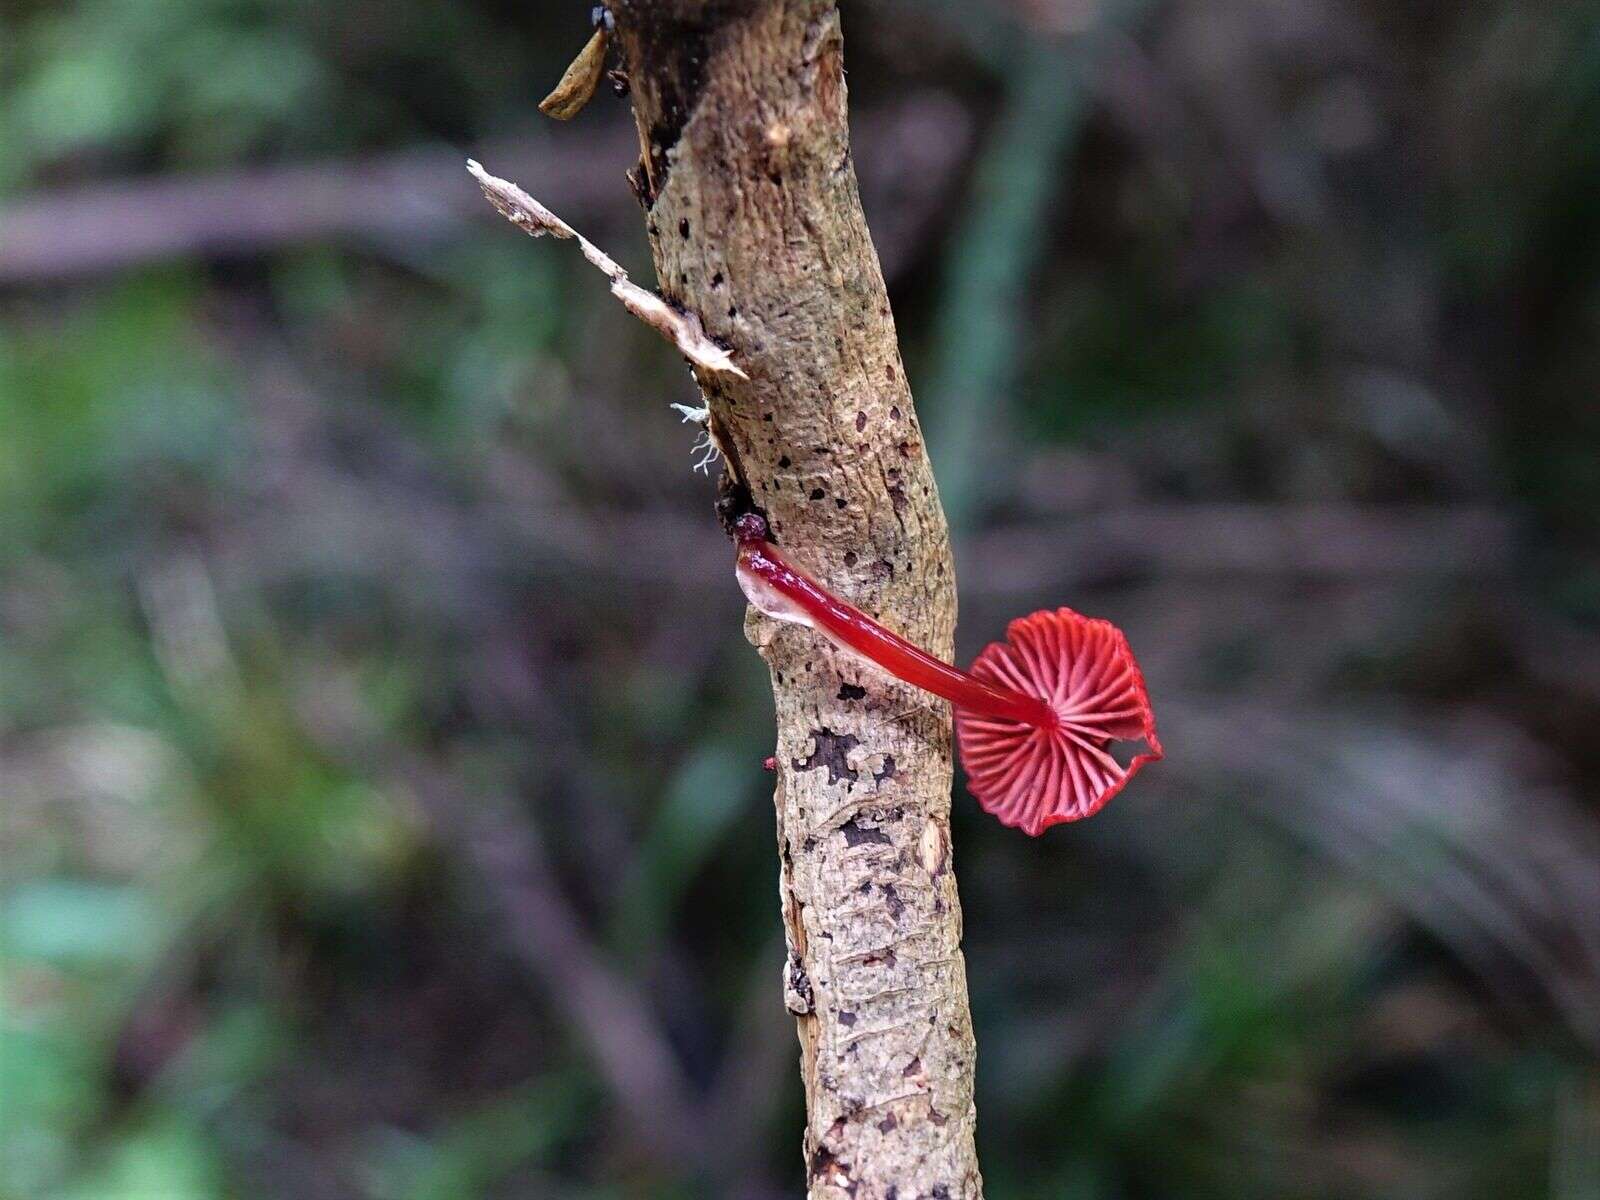 Image of bonnet mushrooms